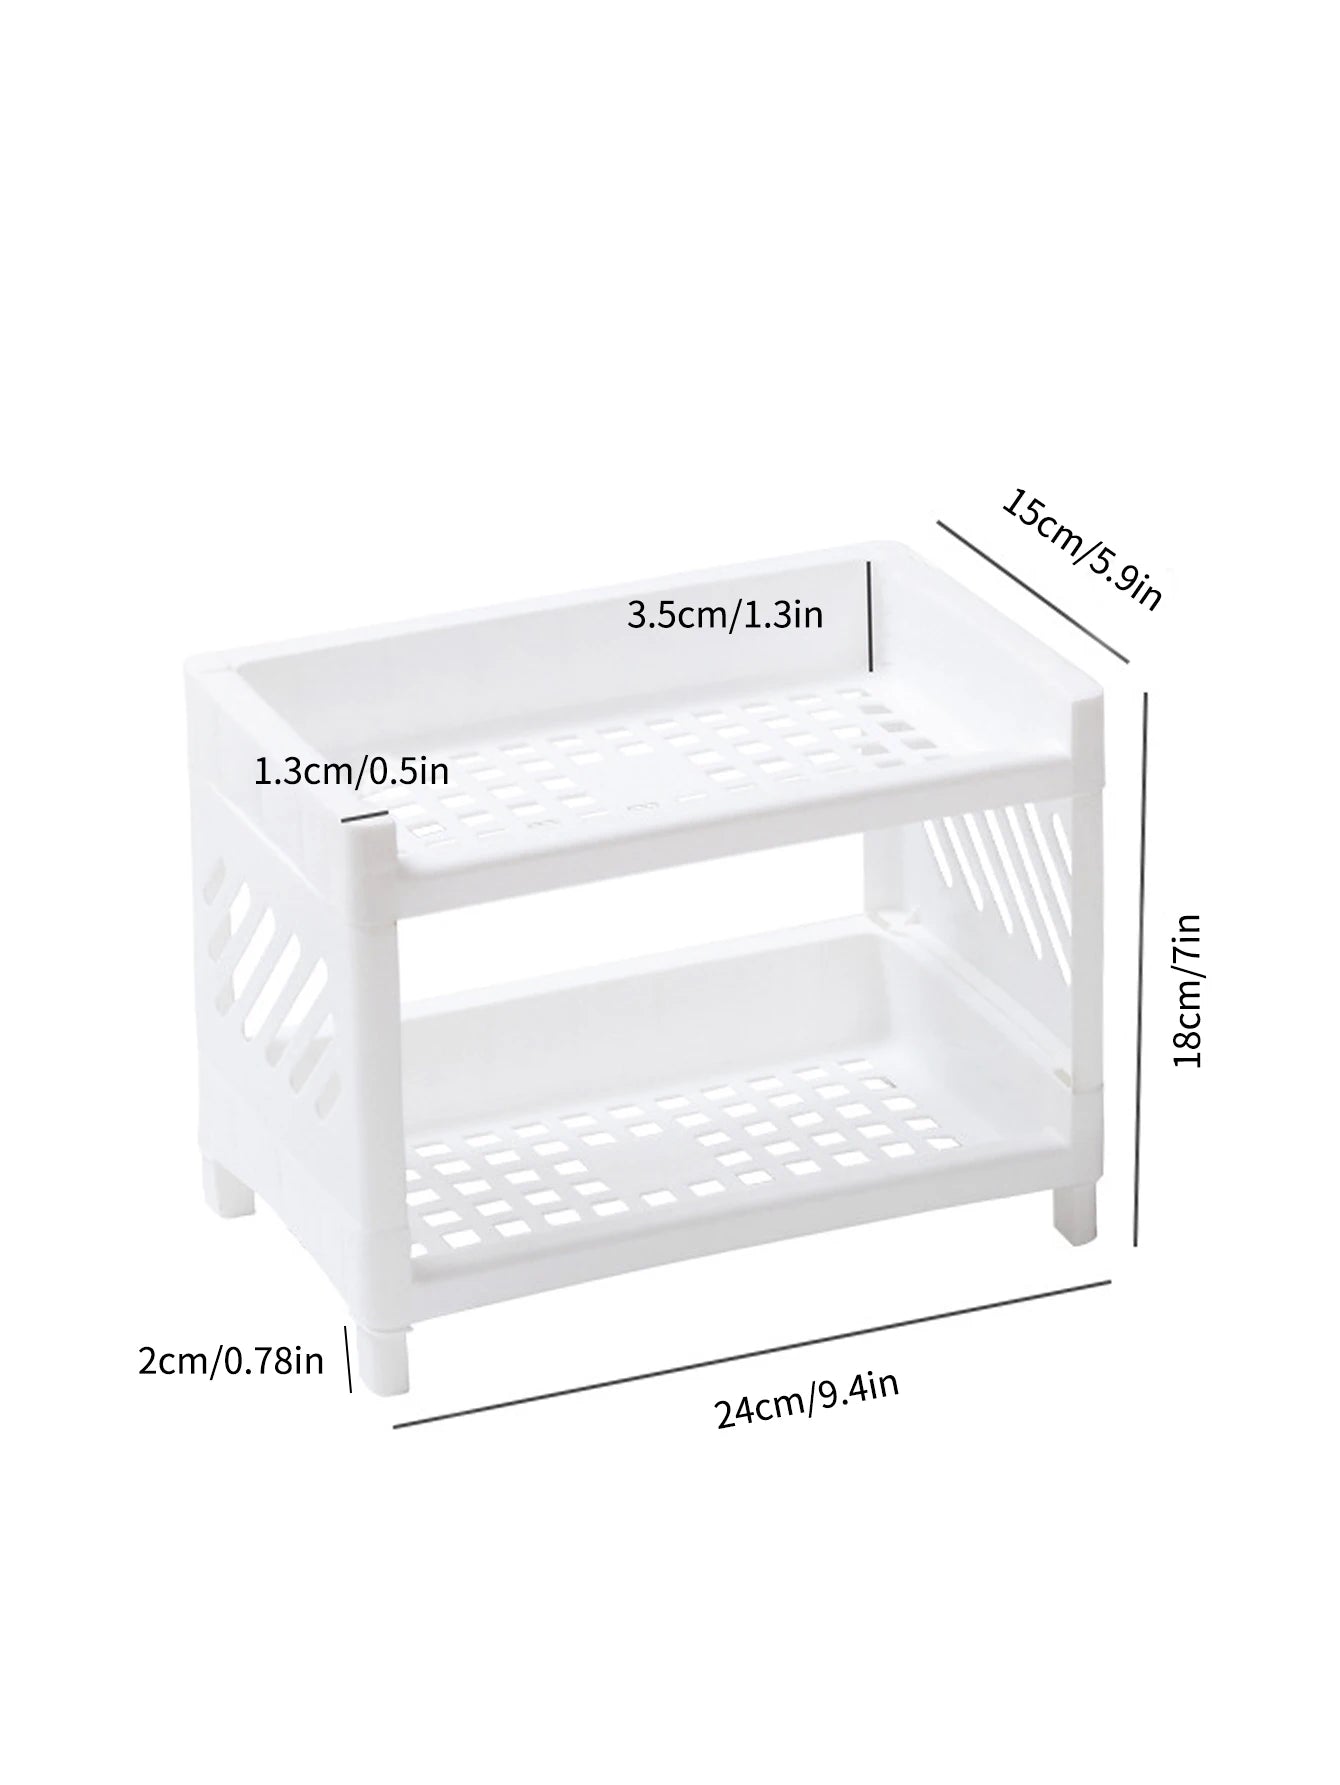 Double Layer Desktop Storage Rack Organize Desk Supplies, Cosmetics Storage (White)